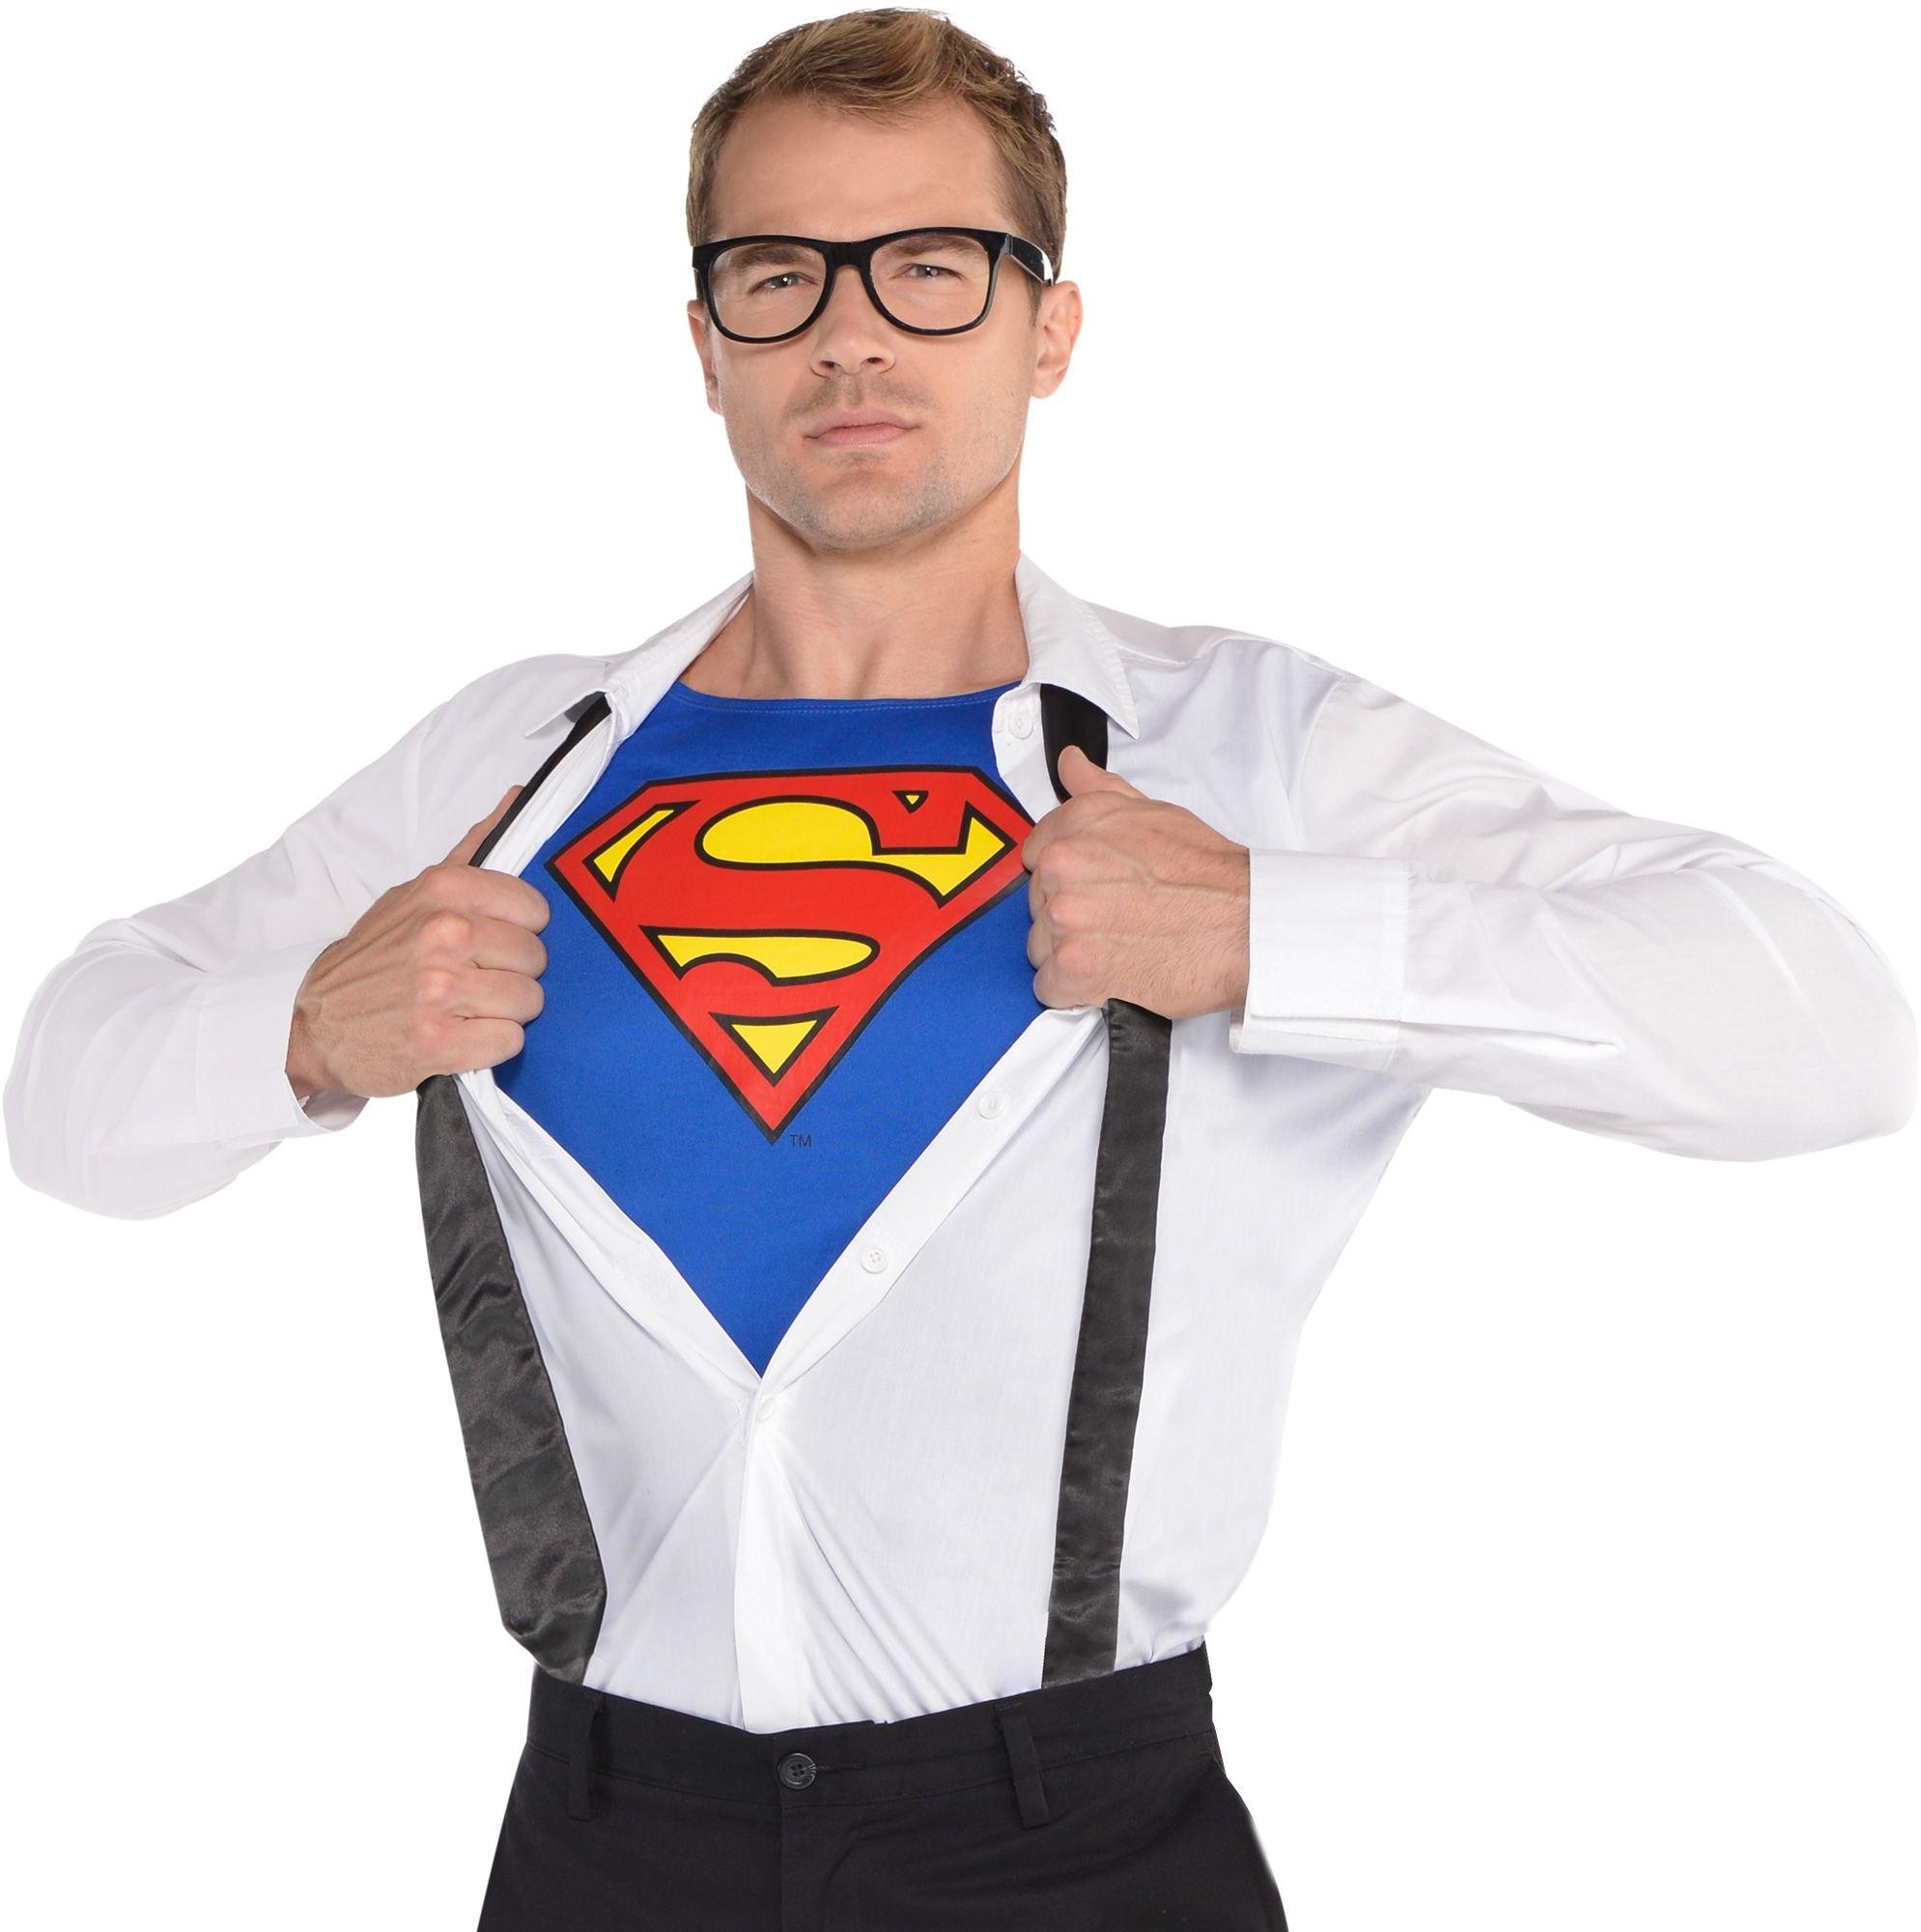 Adult Clark Kent Costume Accessory Kit Superman Party City